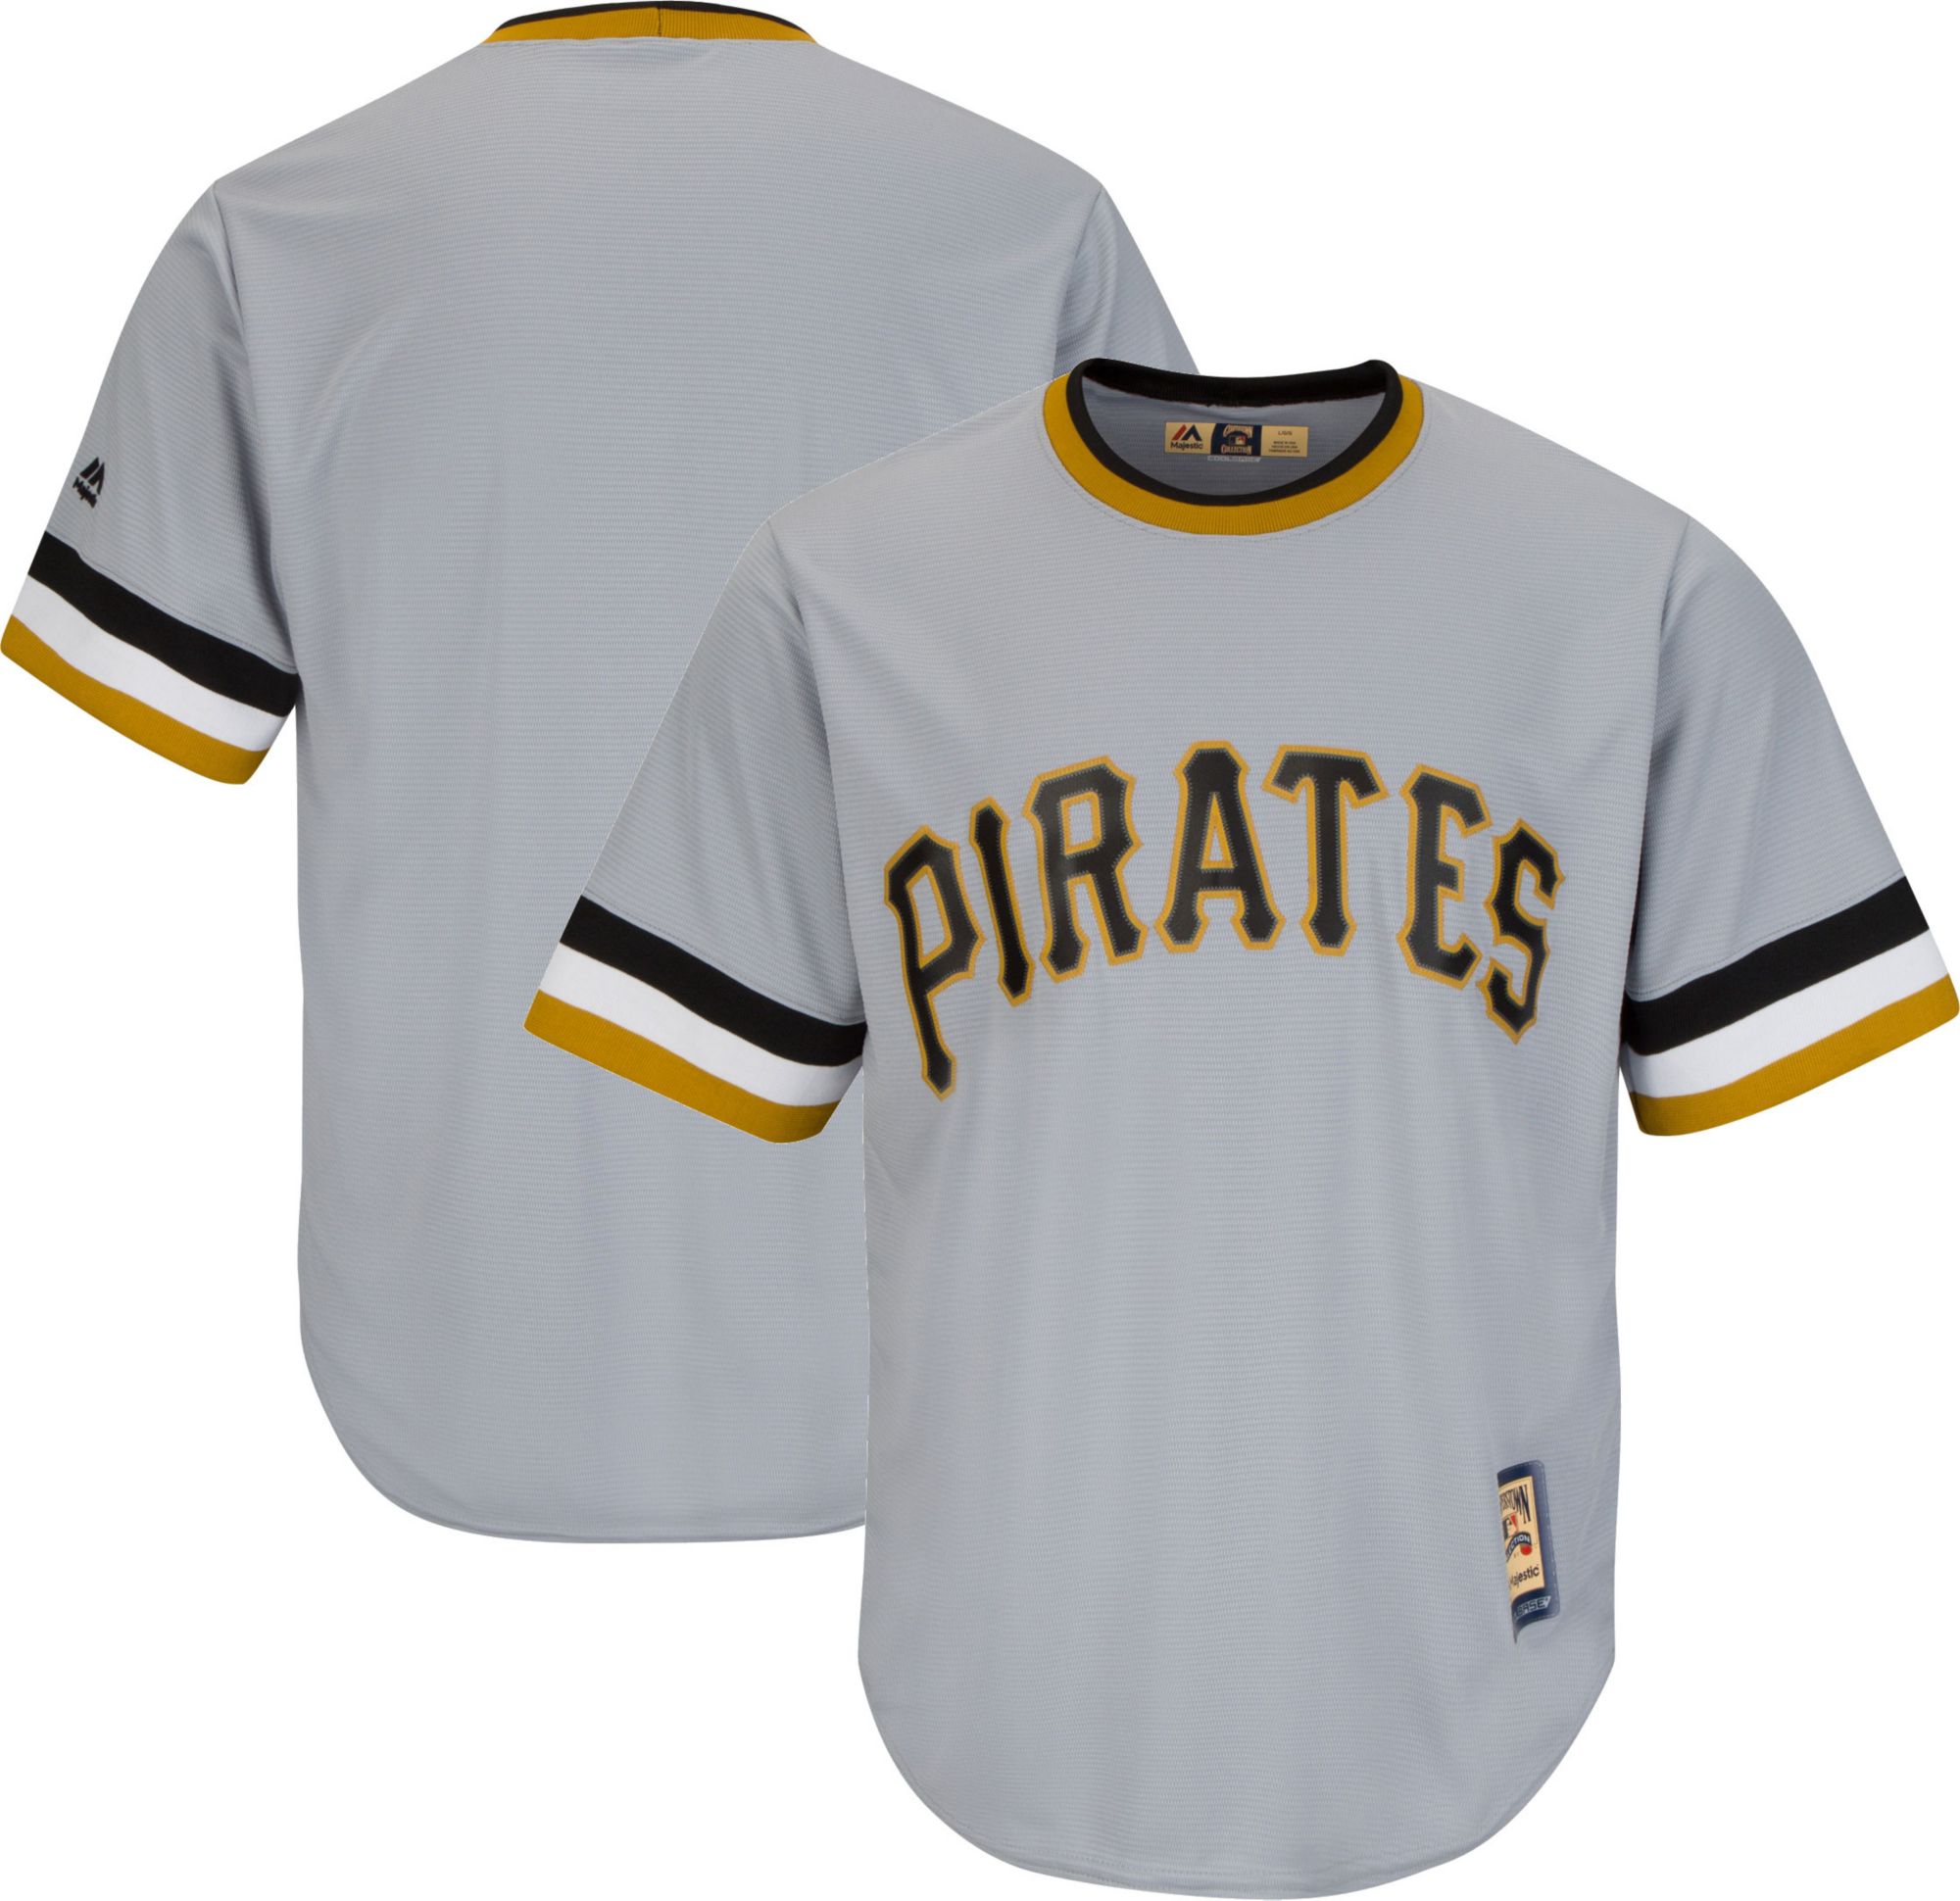 pirates jersey shirt